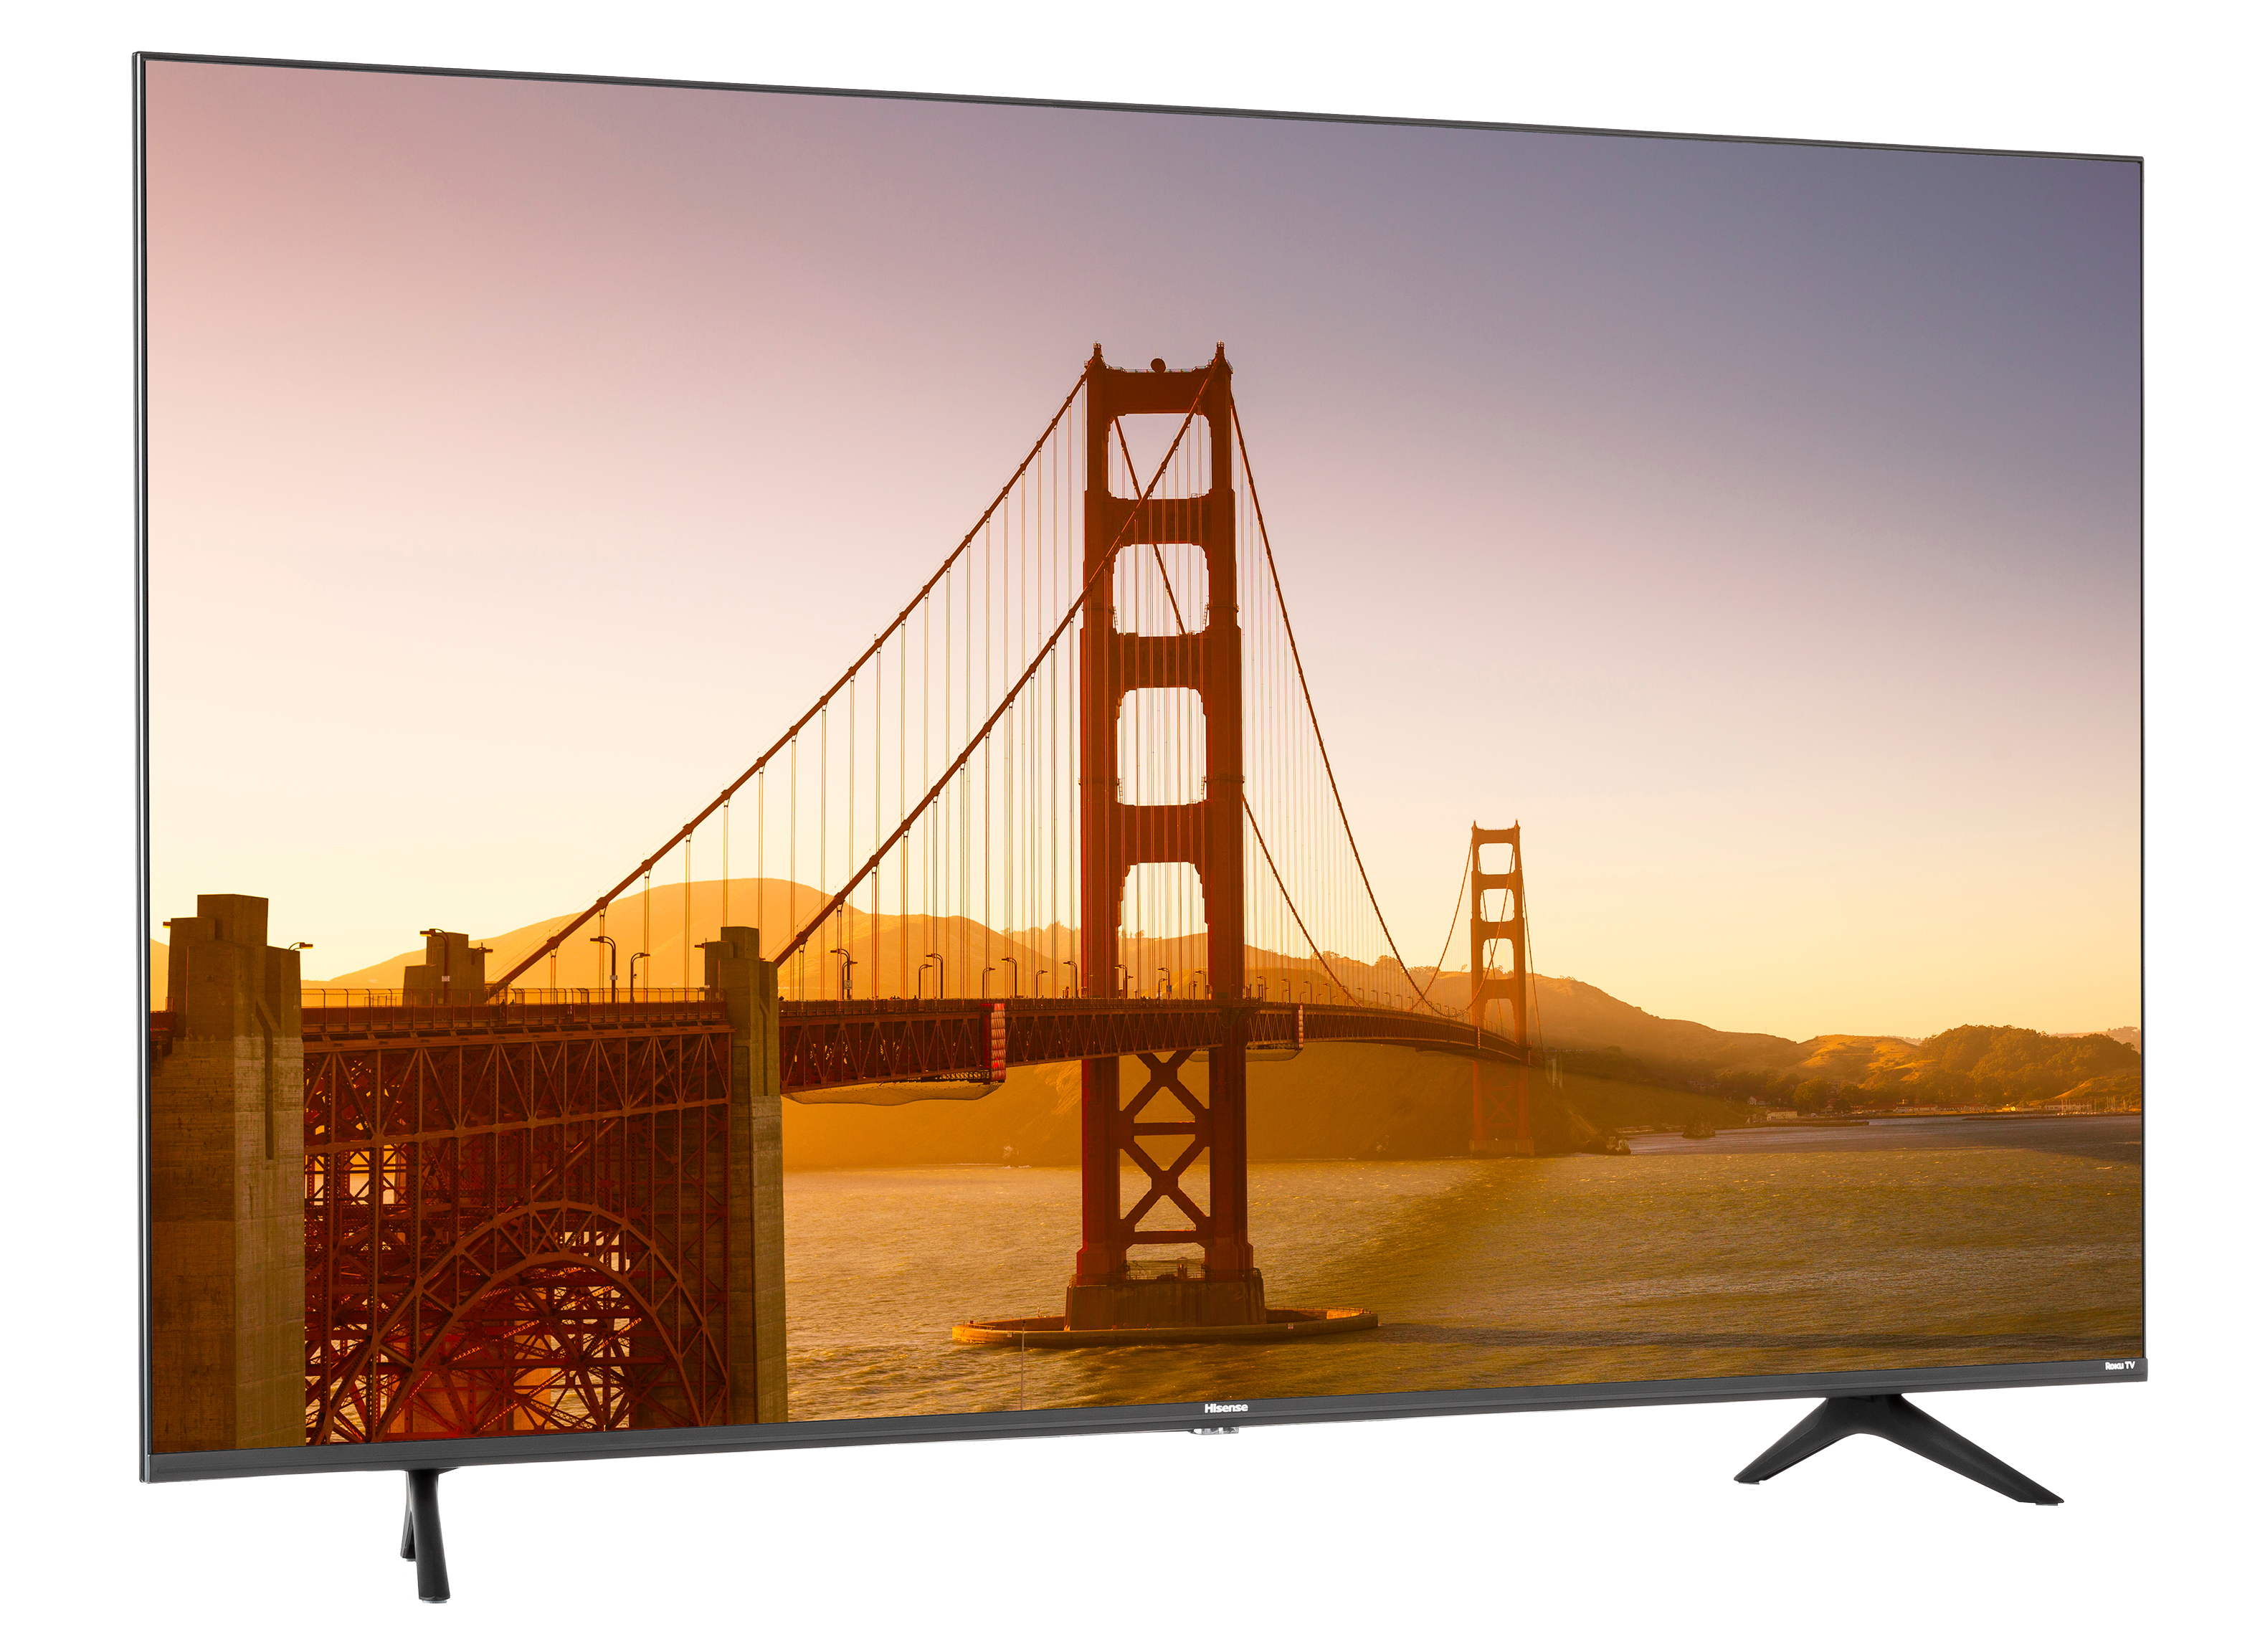 Hisense 58 Class 4K UHD LED LCD Roku Smart TV HDR R6 Series 58R6E3 